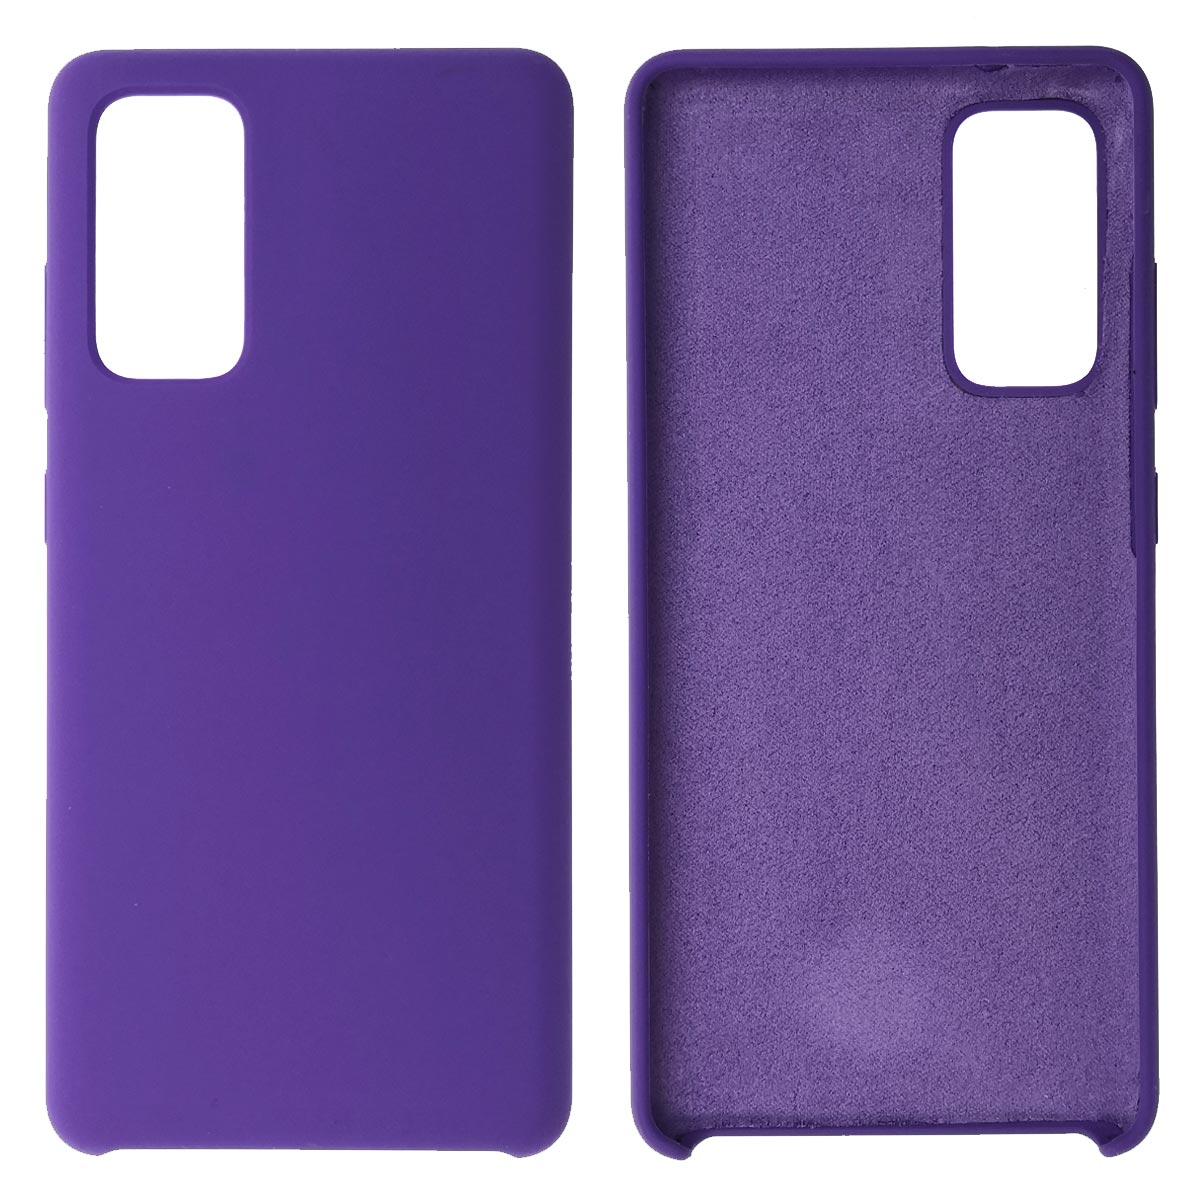 Чехол накладка Silicon Cover для SAMSUNG Galaxy S20FE, силикон, бархат, цвет фиолетовый